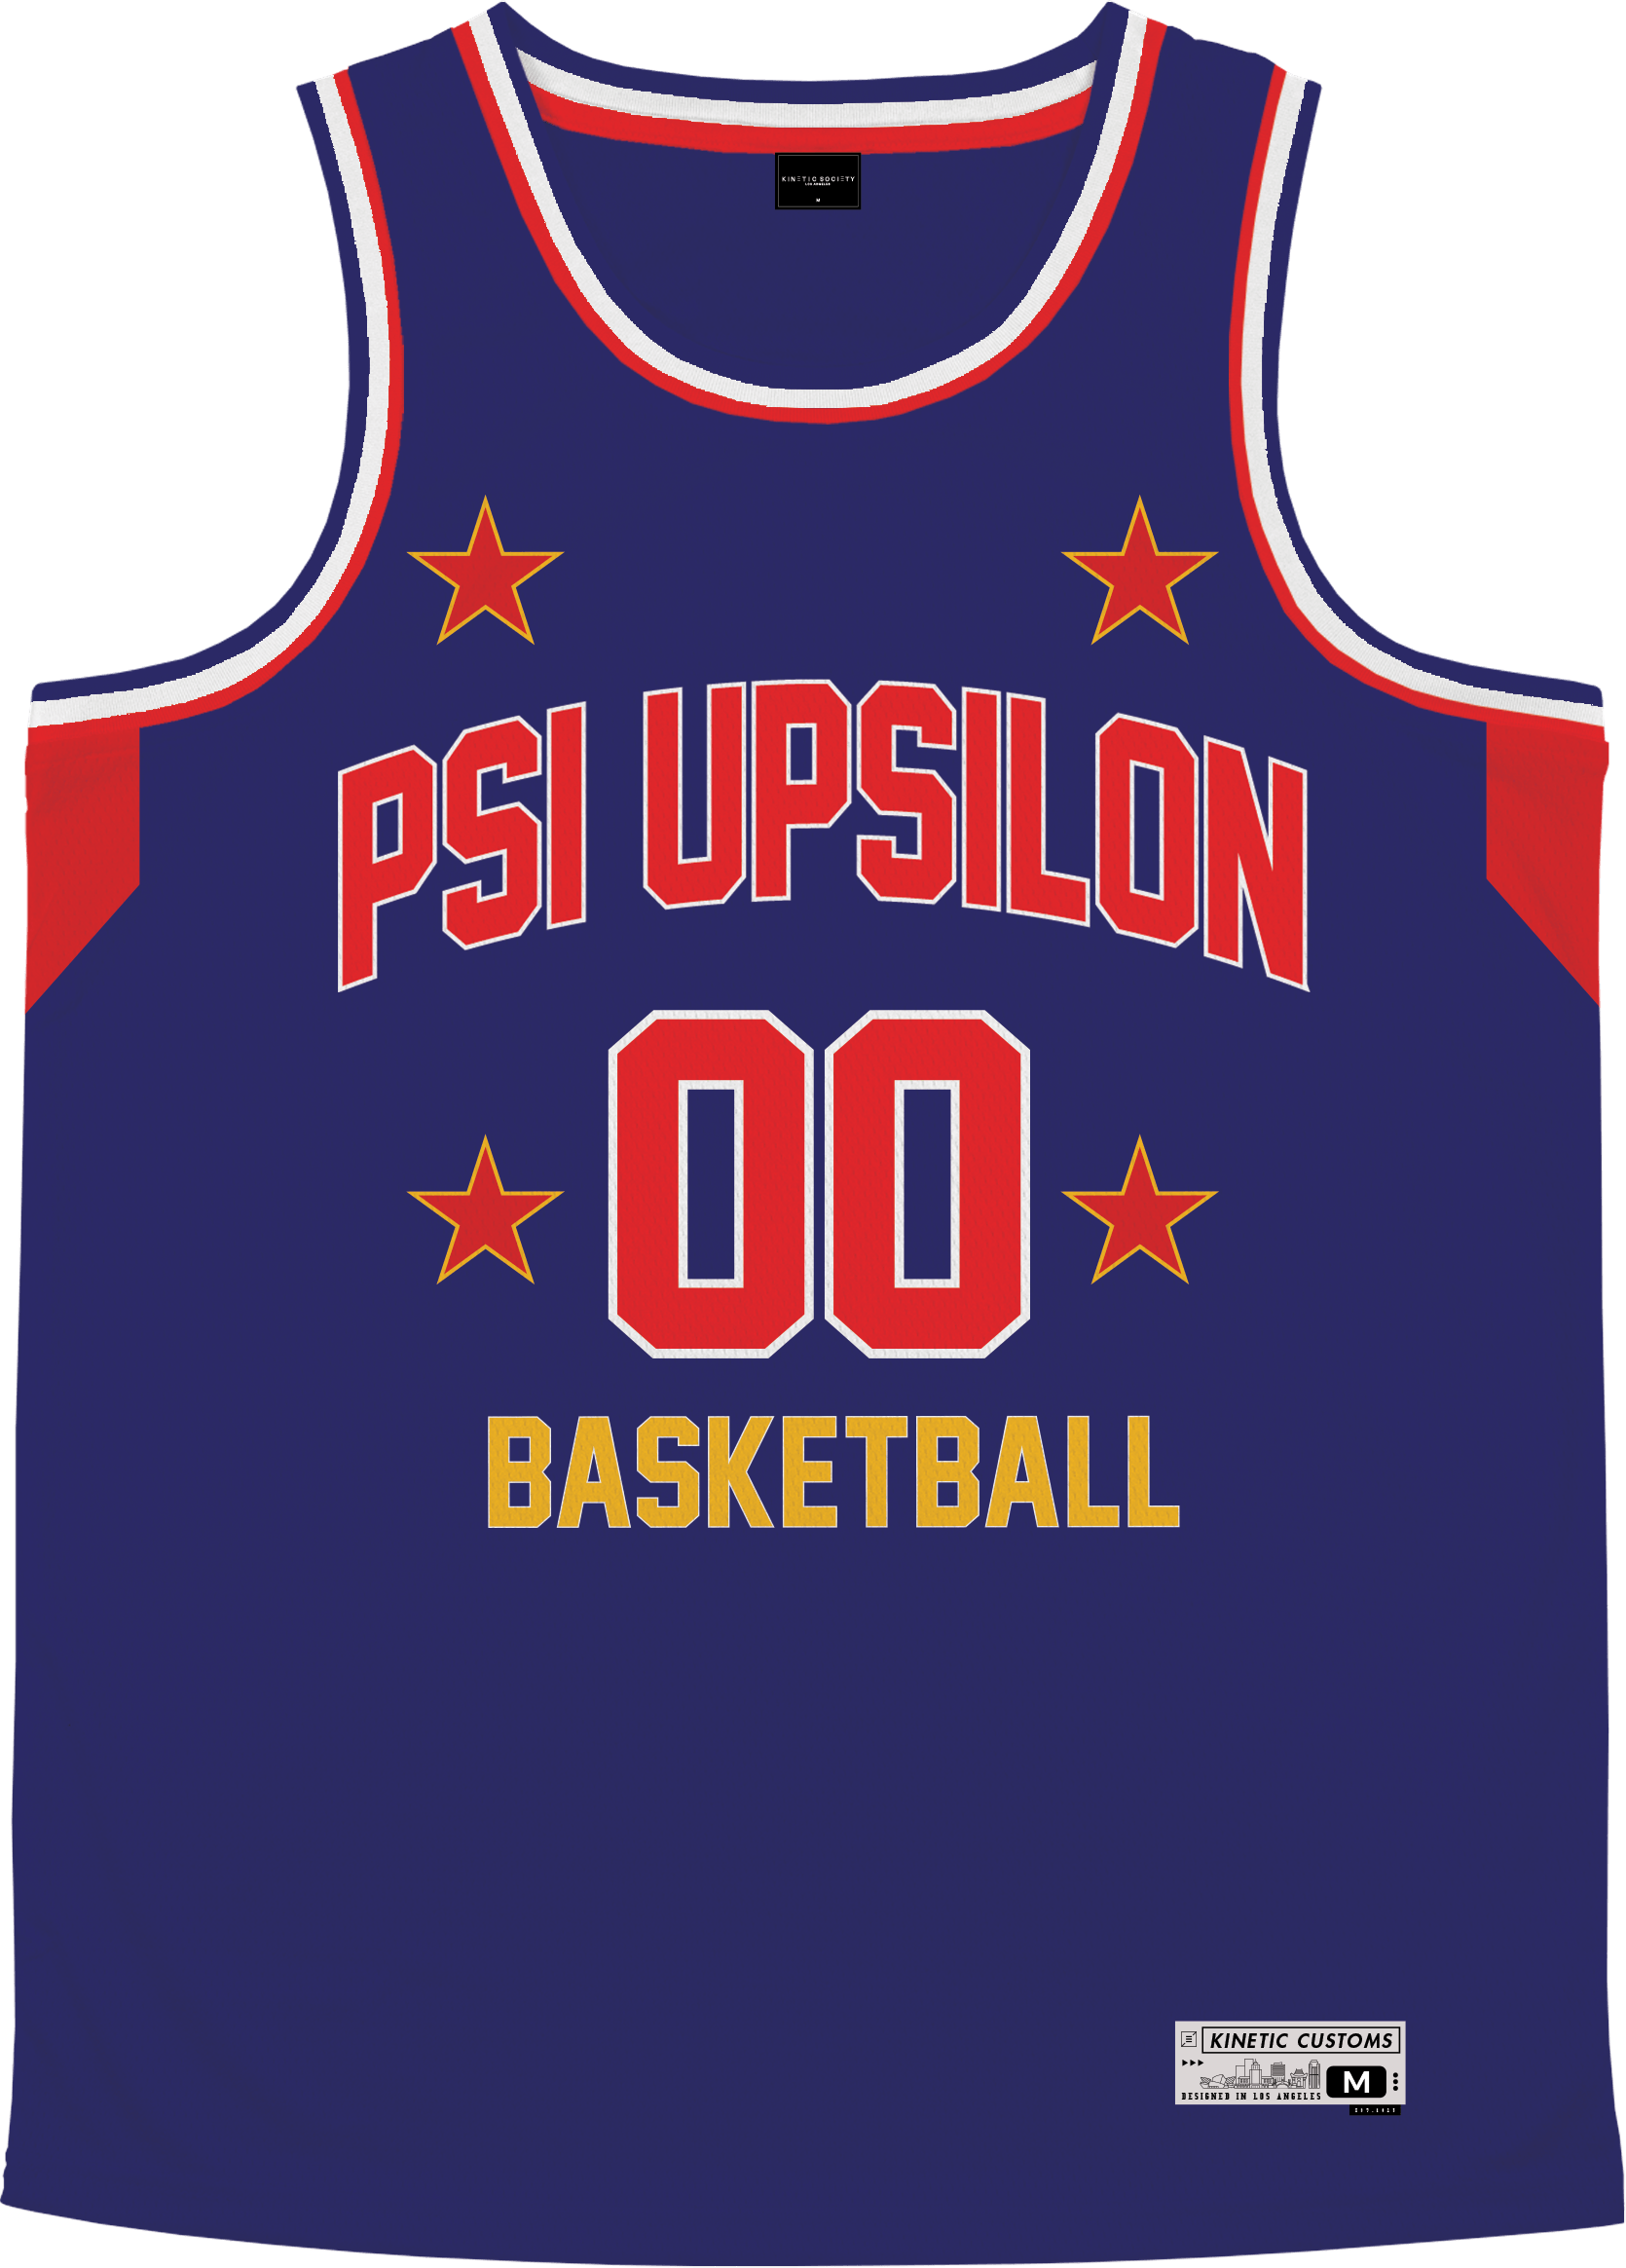 Psi Upsilon - Retro Ballers Basketball Jersey - Kinetic Society